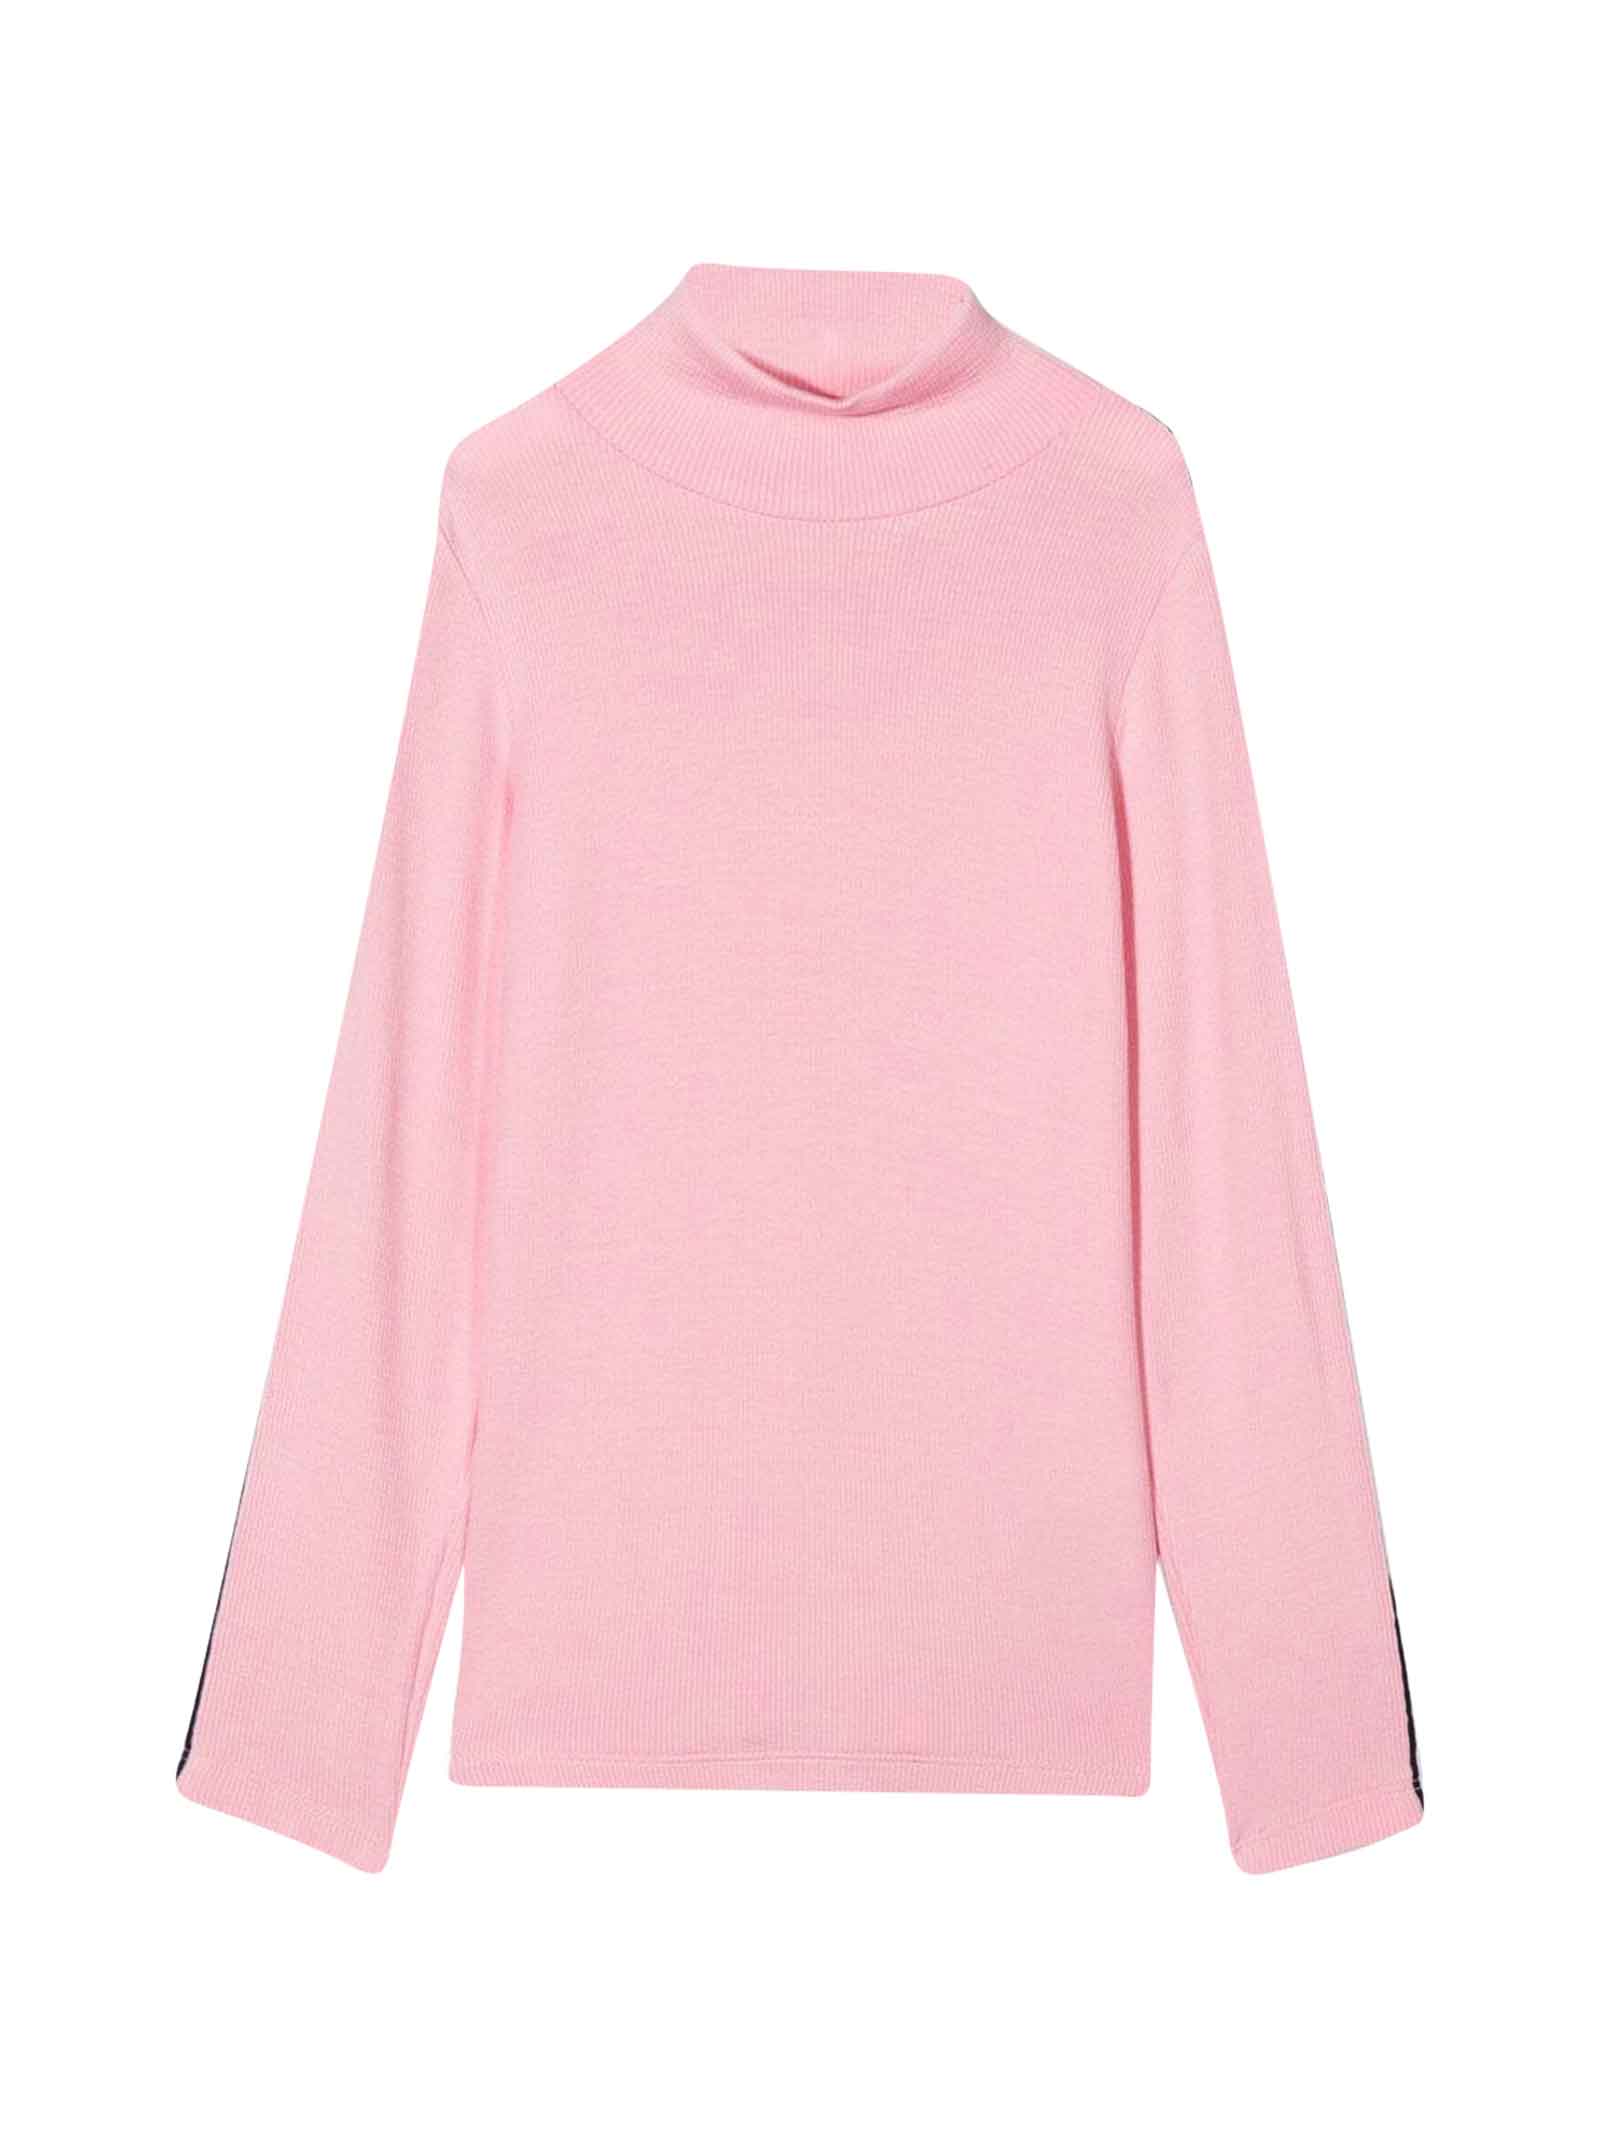 Chiara Ferragni Pink Sweatshirt Girl